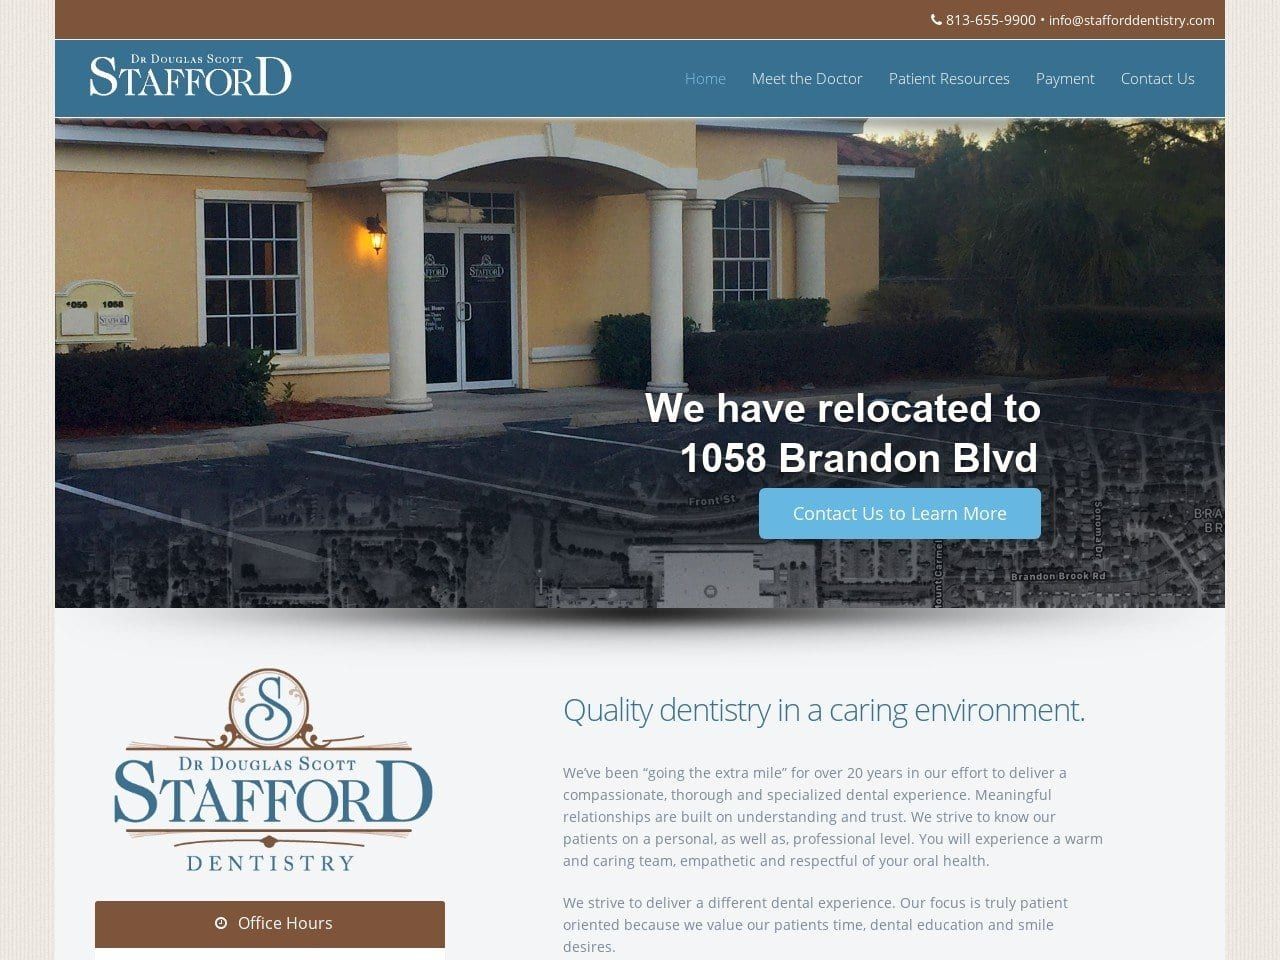 Stafford Douglas Scott DMD PA Website Screenshot from stafforddentistry.com